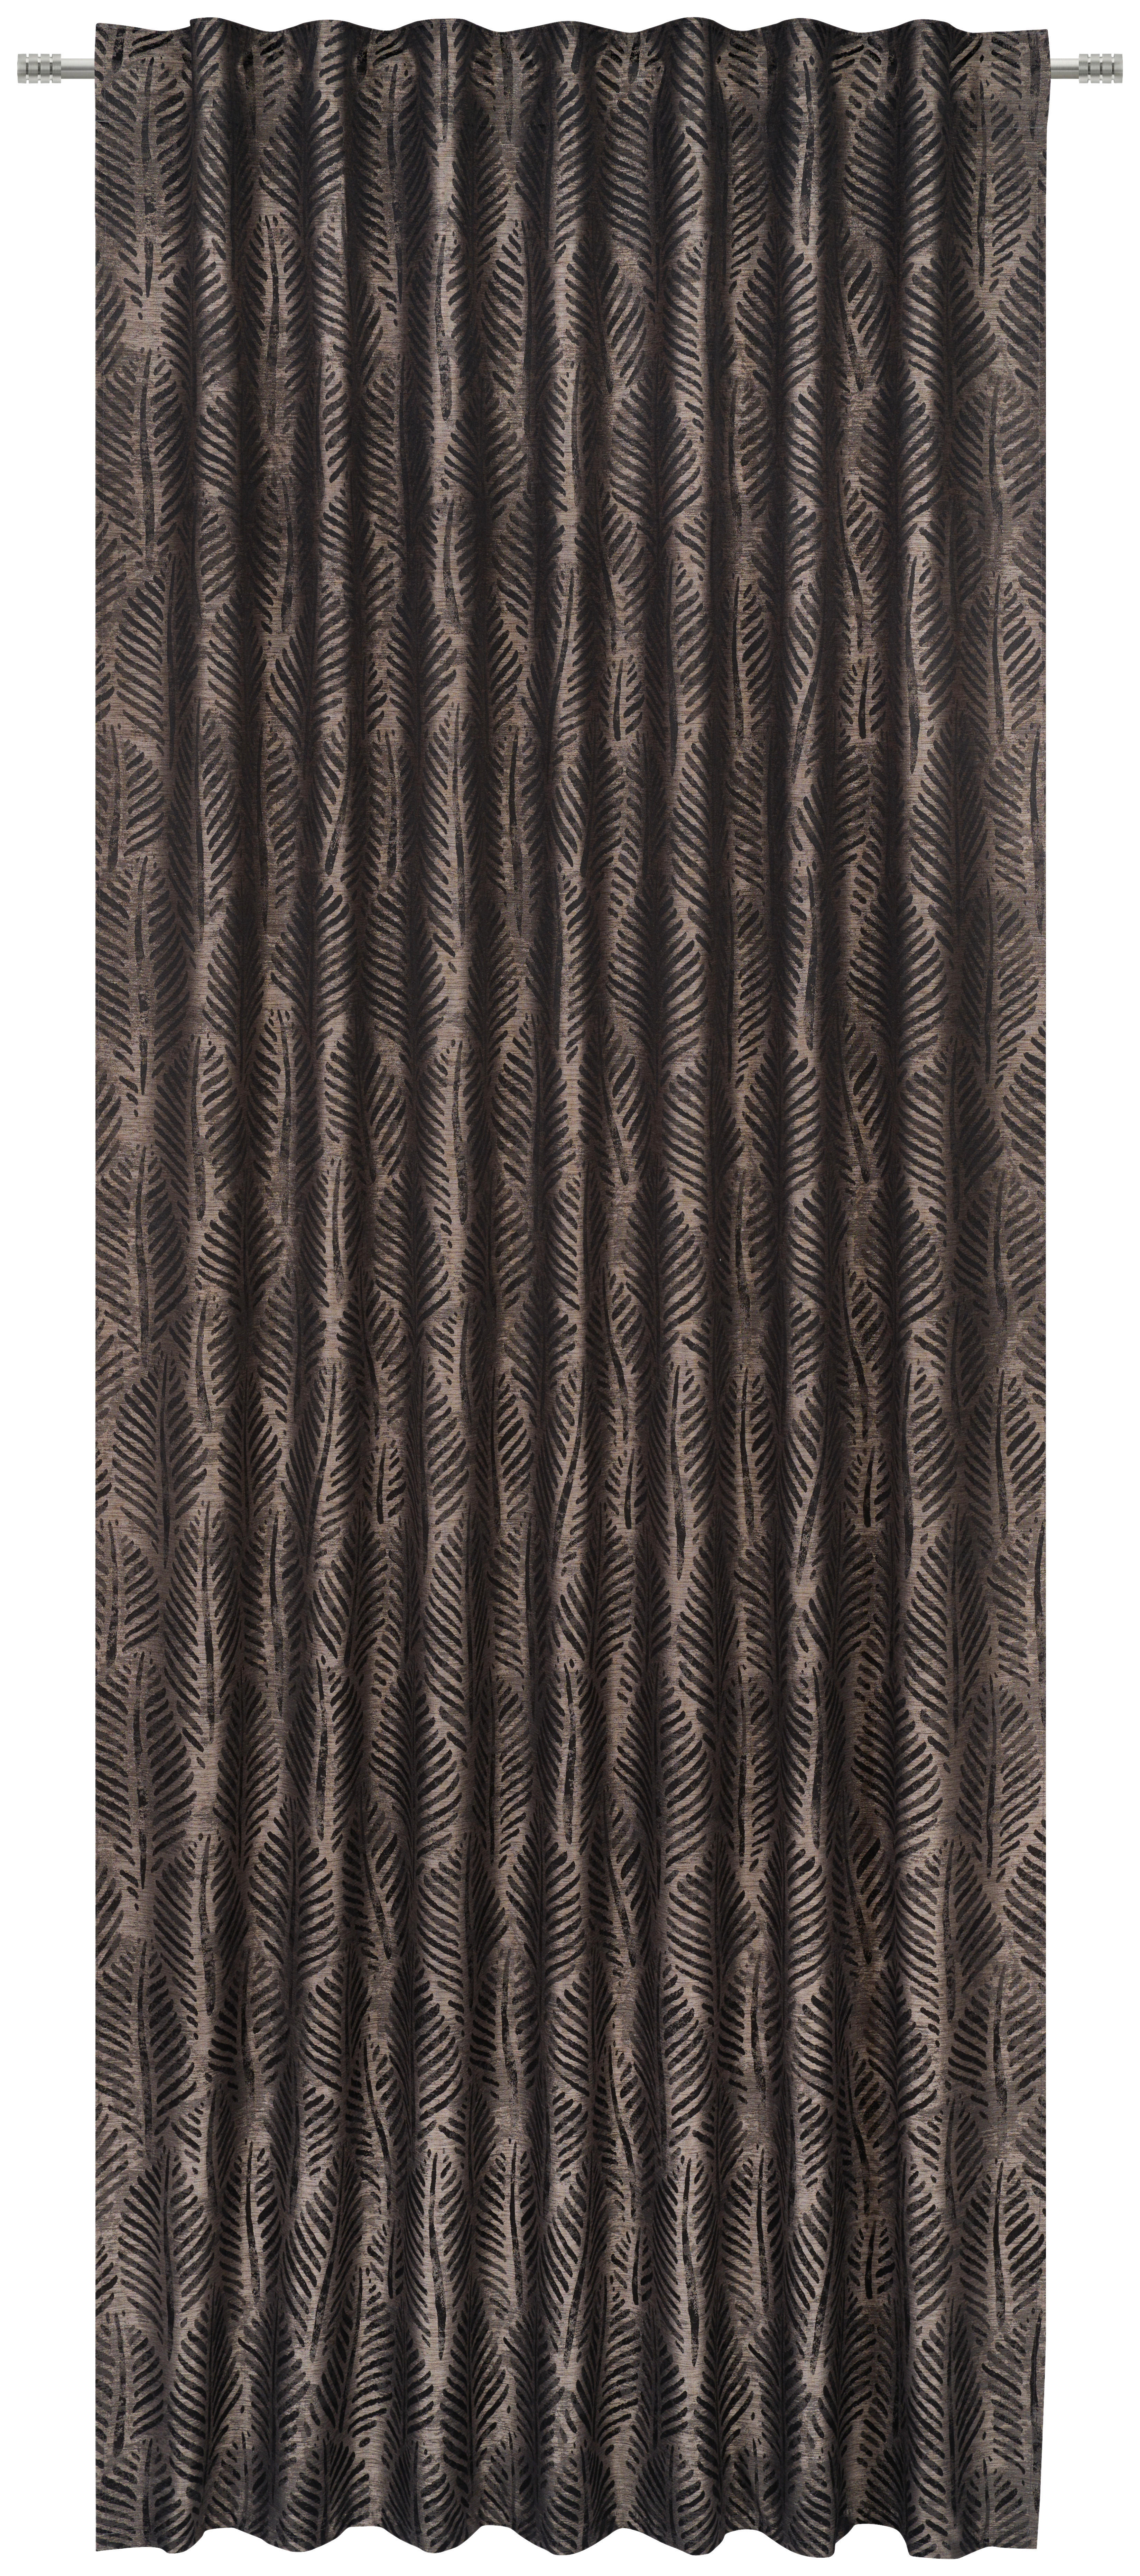 FERTIGVORHANG blickdicht 140/245 cm   - Braun, Trend, Textil (140/245cm) - Esposa